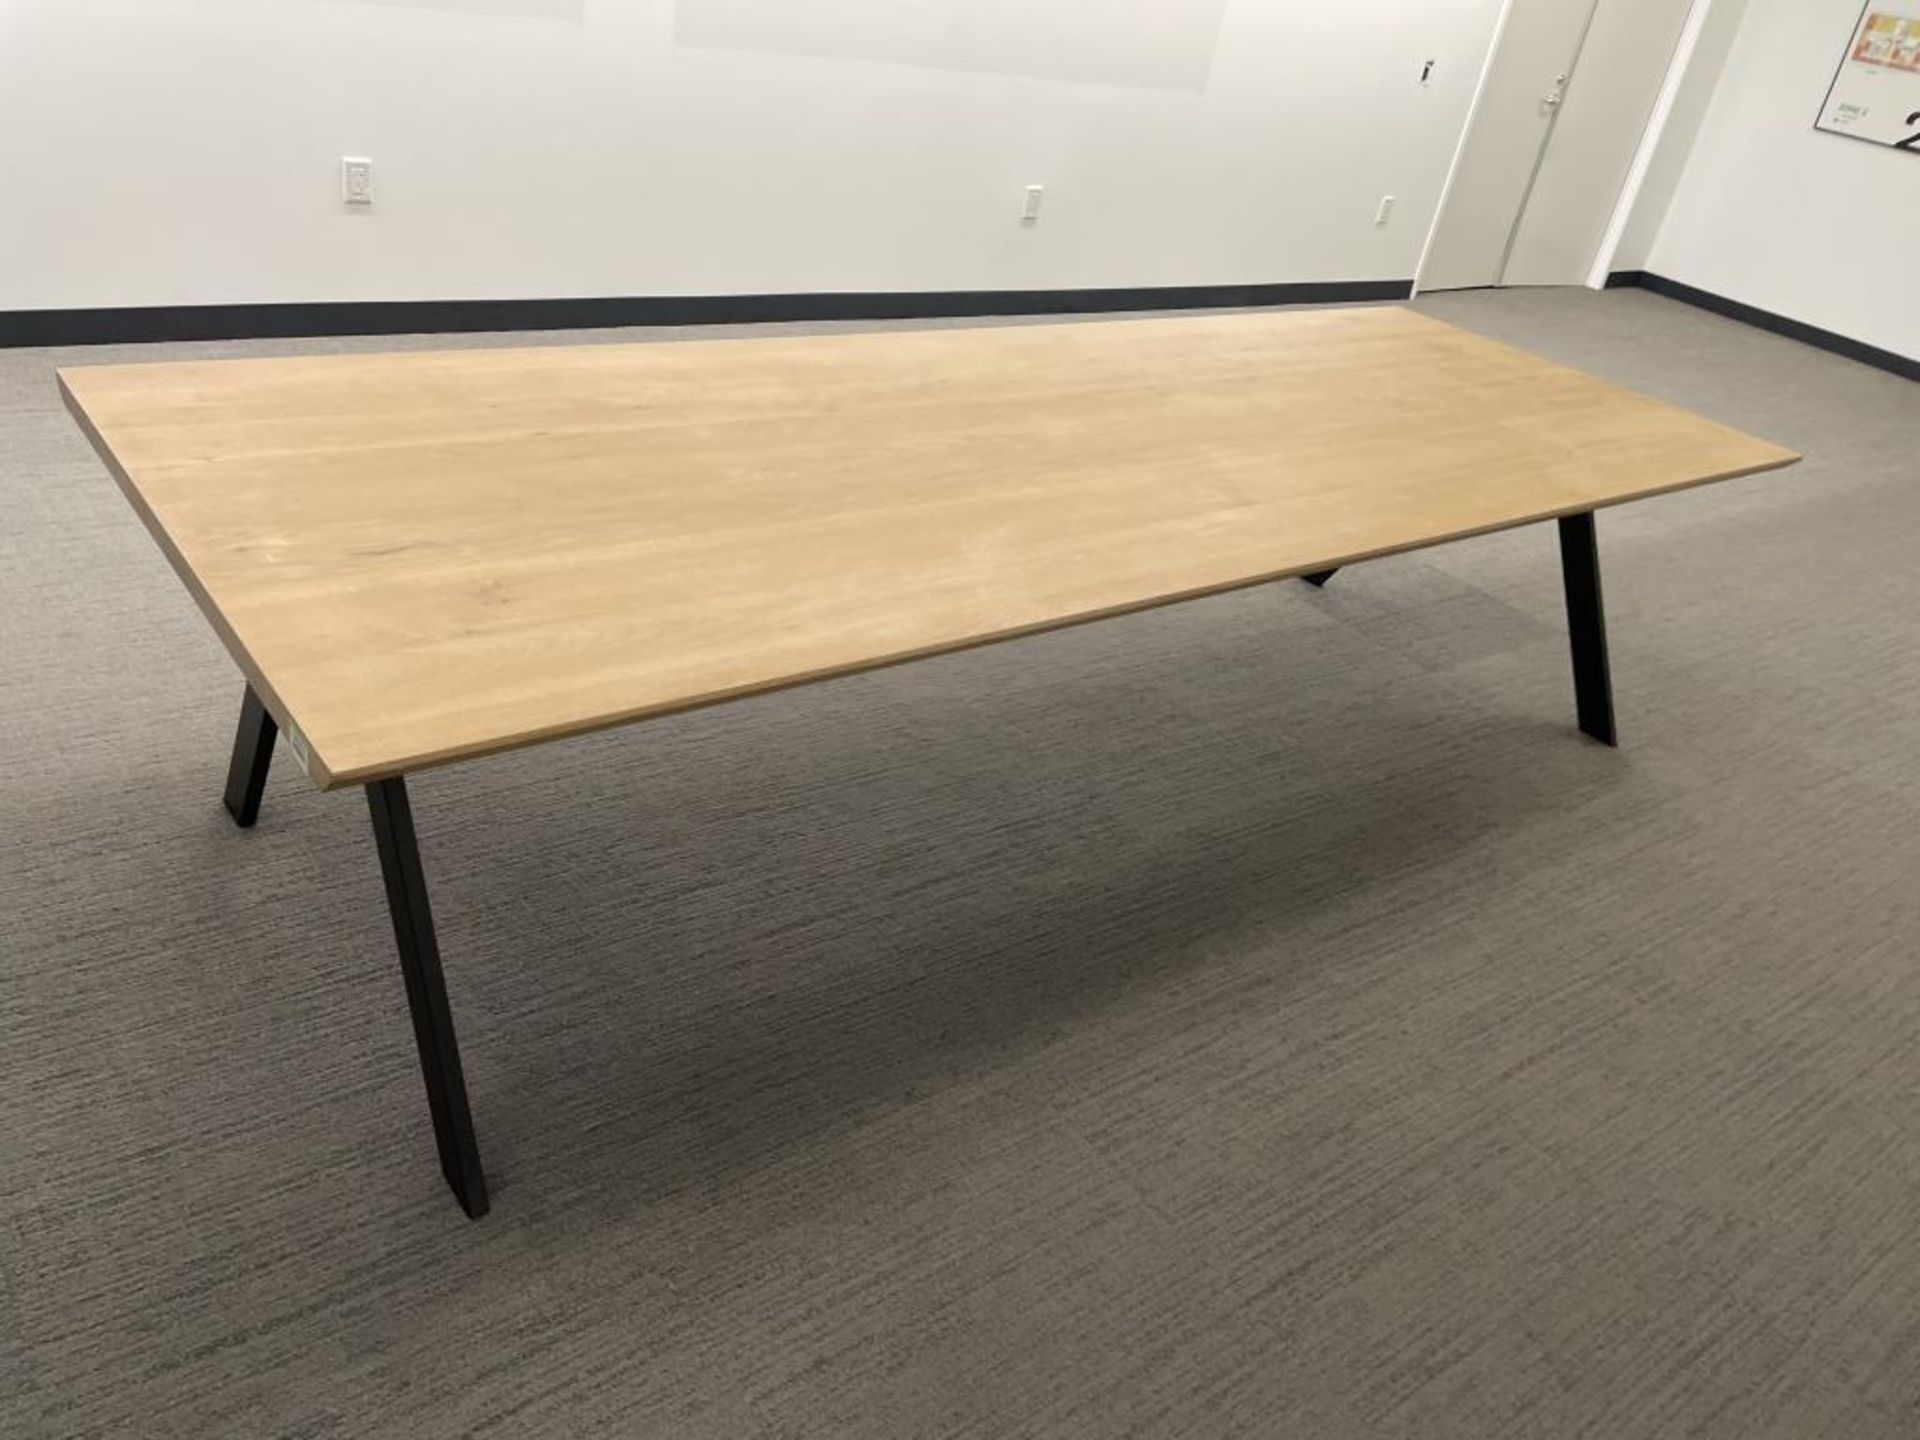 OHIO Design Table, A-Frame 120"L - Image 2 of 6